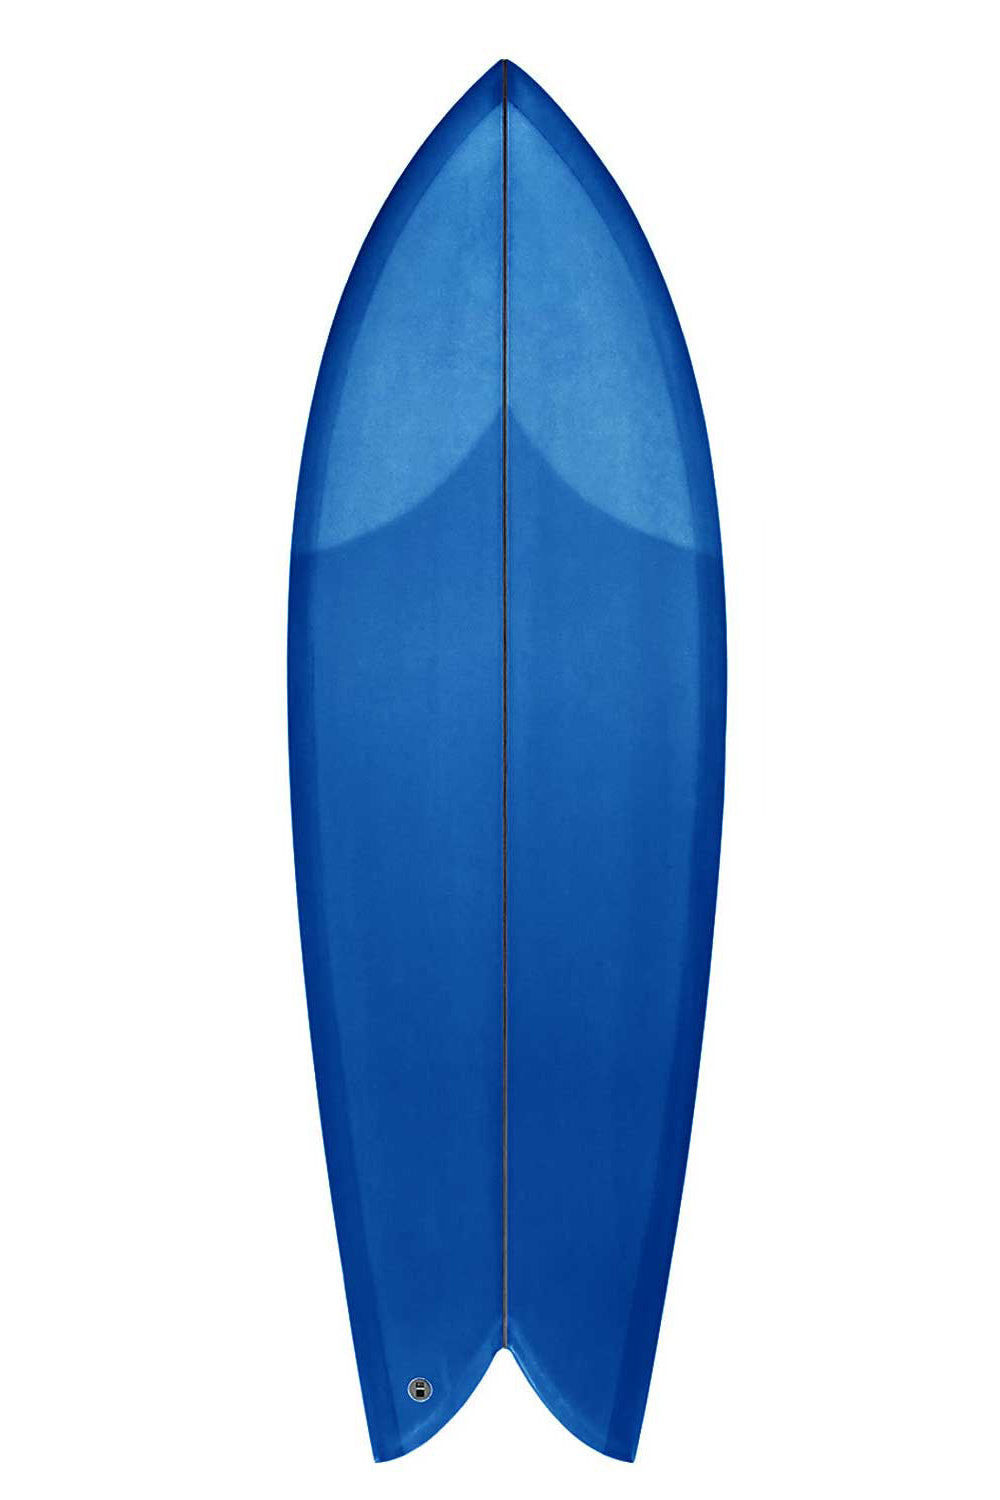 Chris Christenson FISH Surfboard swallow tail